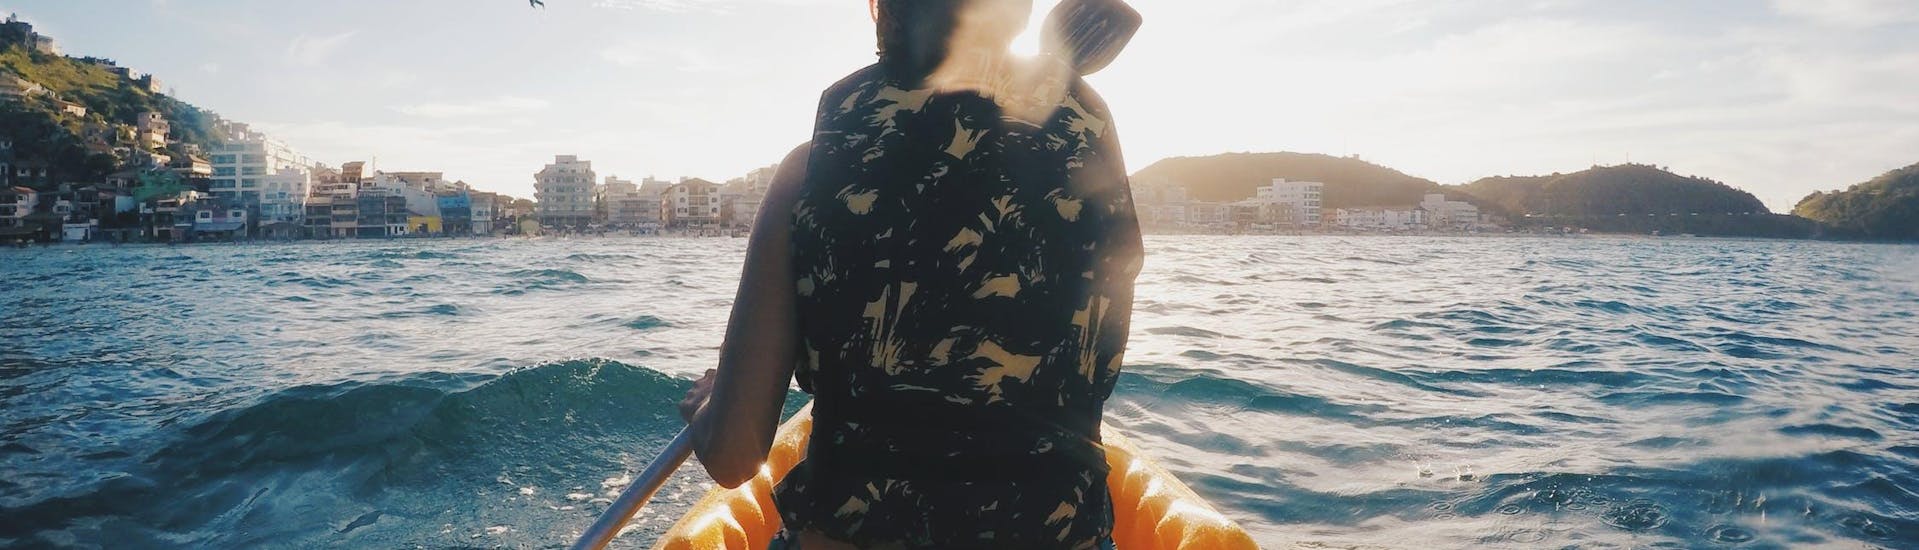 Balade en catamaran au coucher de soleil autour de Palma.